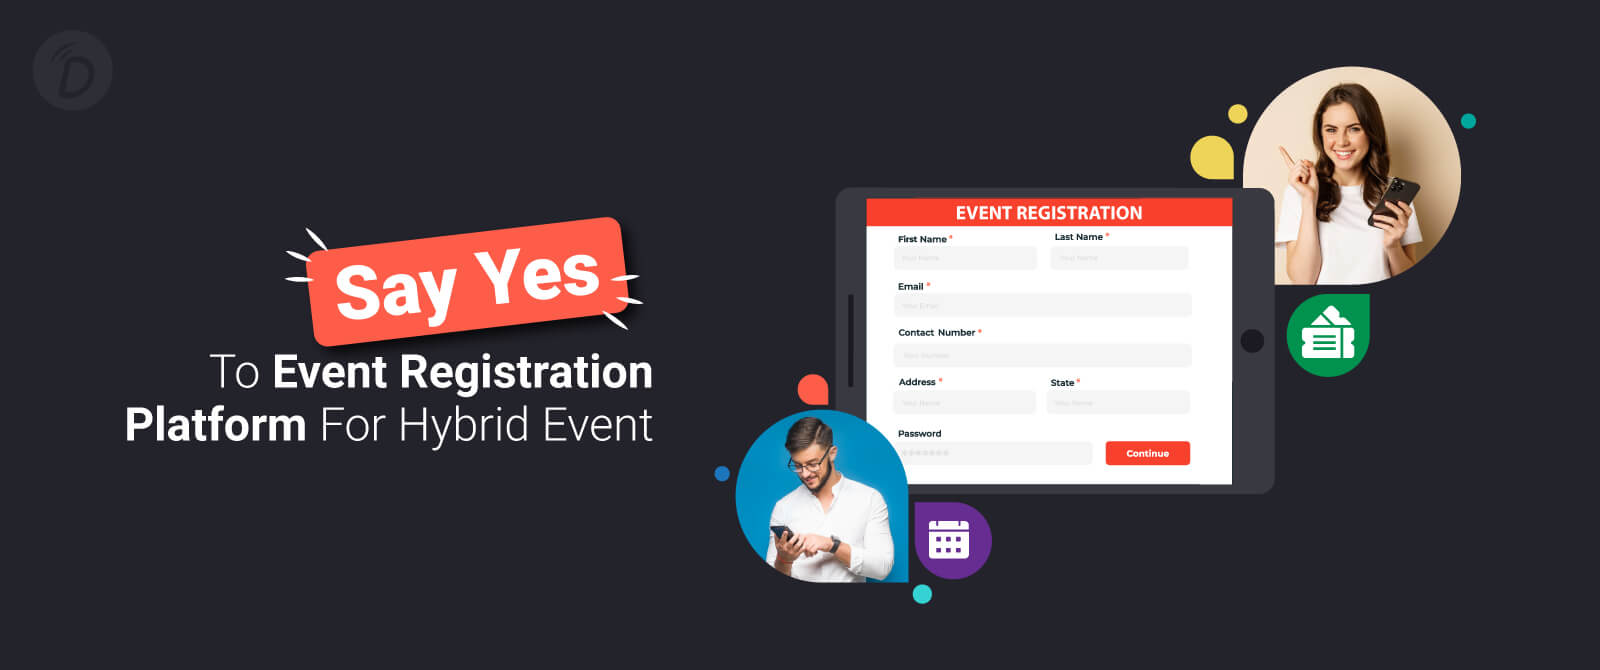 Say “Yes” to Event Registration Platform for Hybrid Event